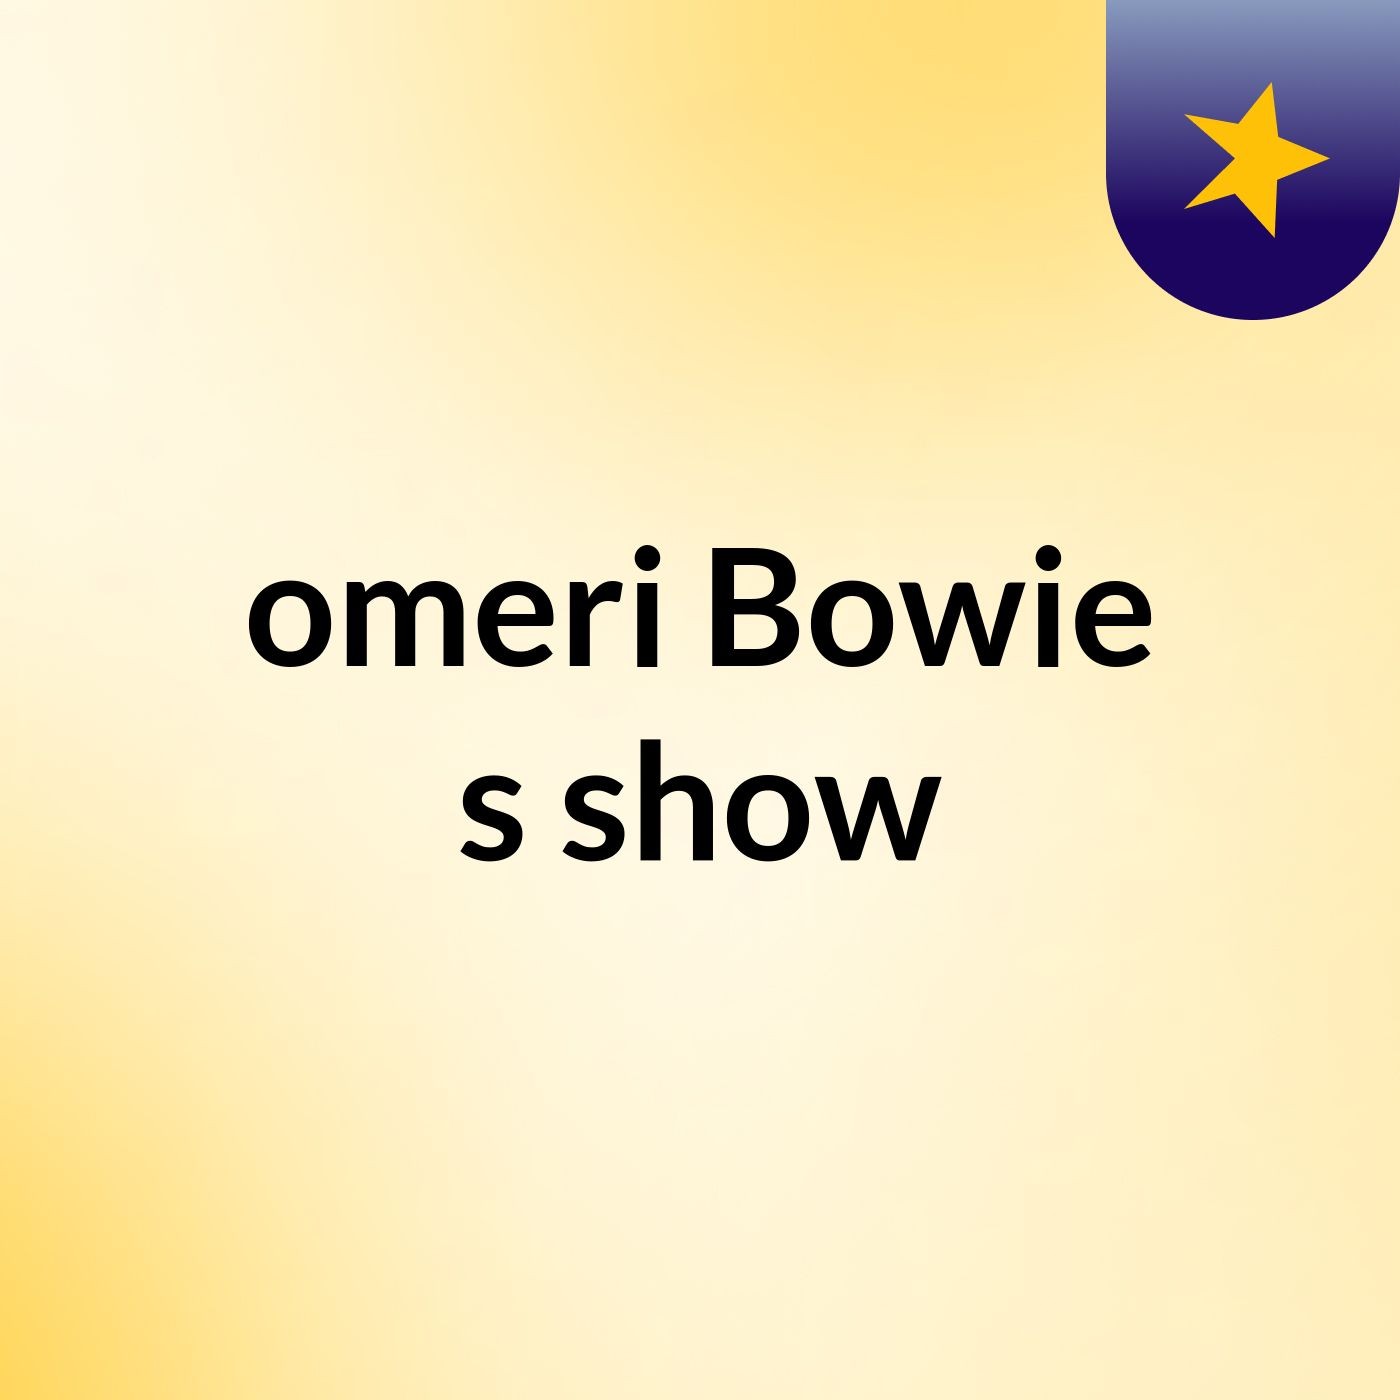 omeri Bowie's show